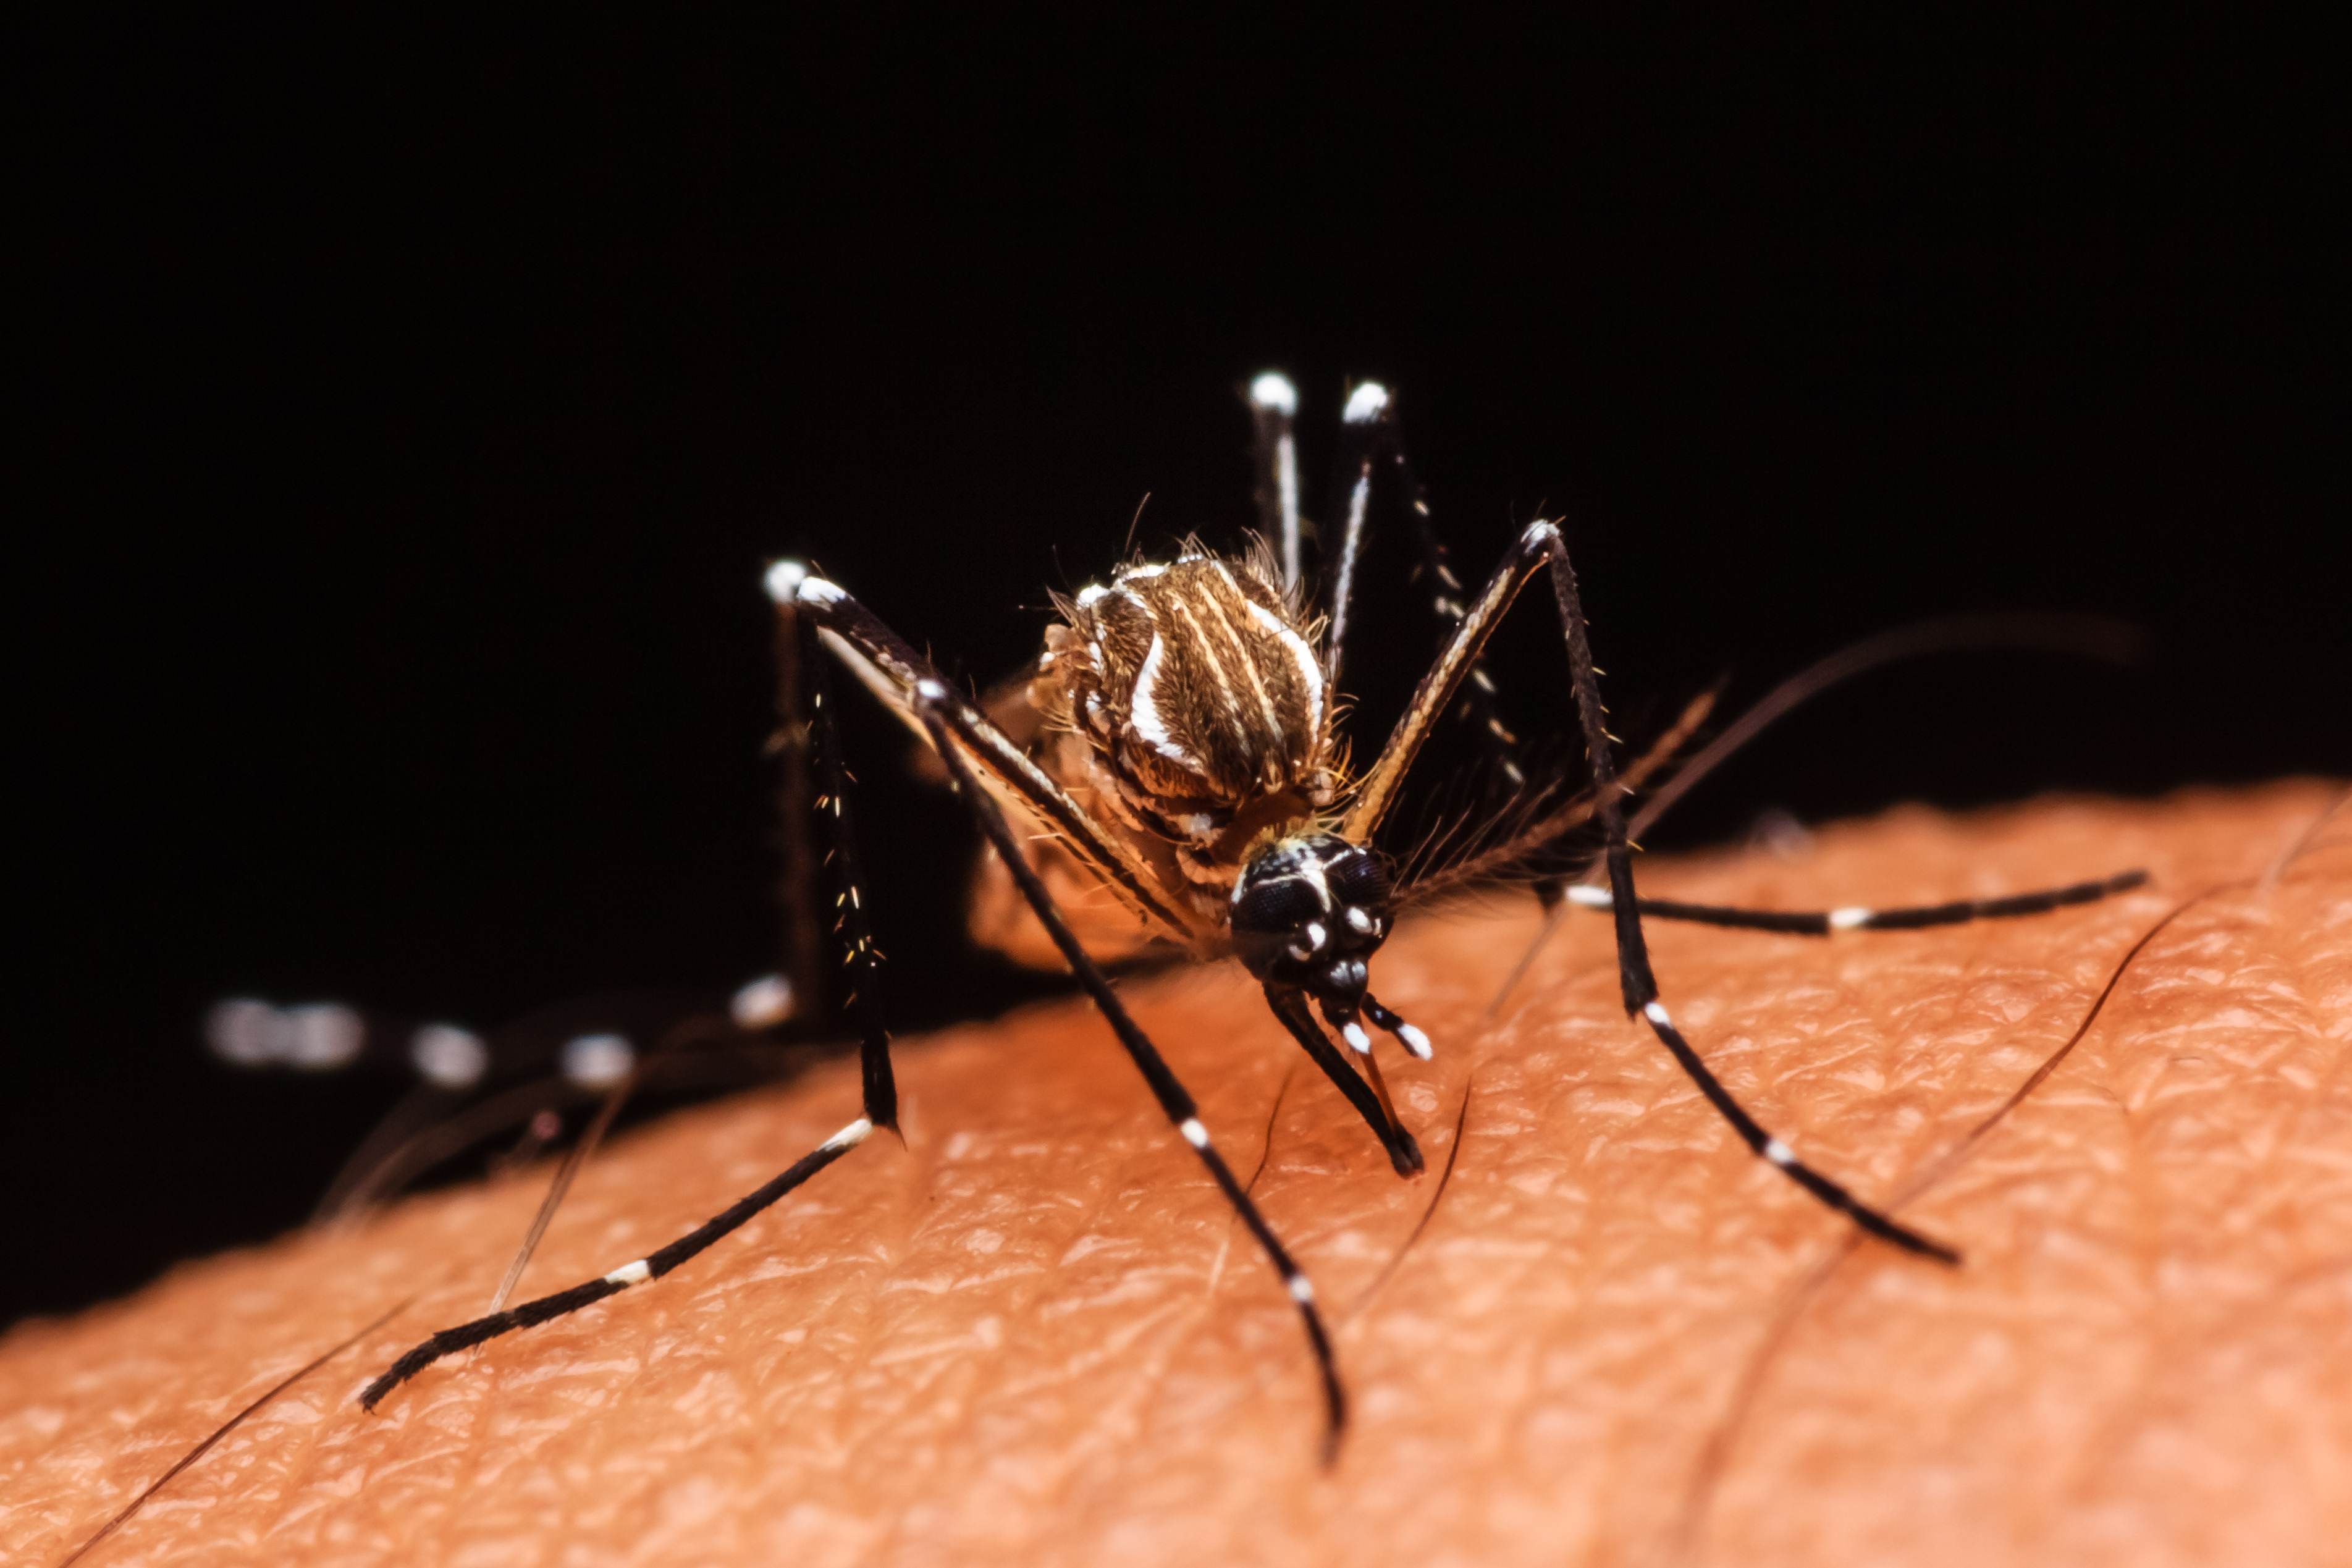     Epidémie : la dengue circule de moins en moins en Martinique

